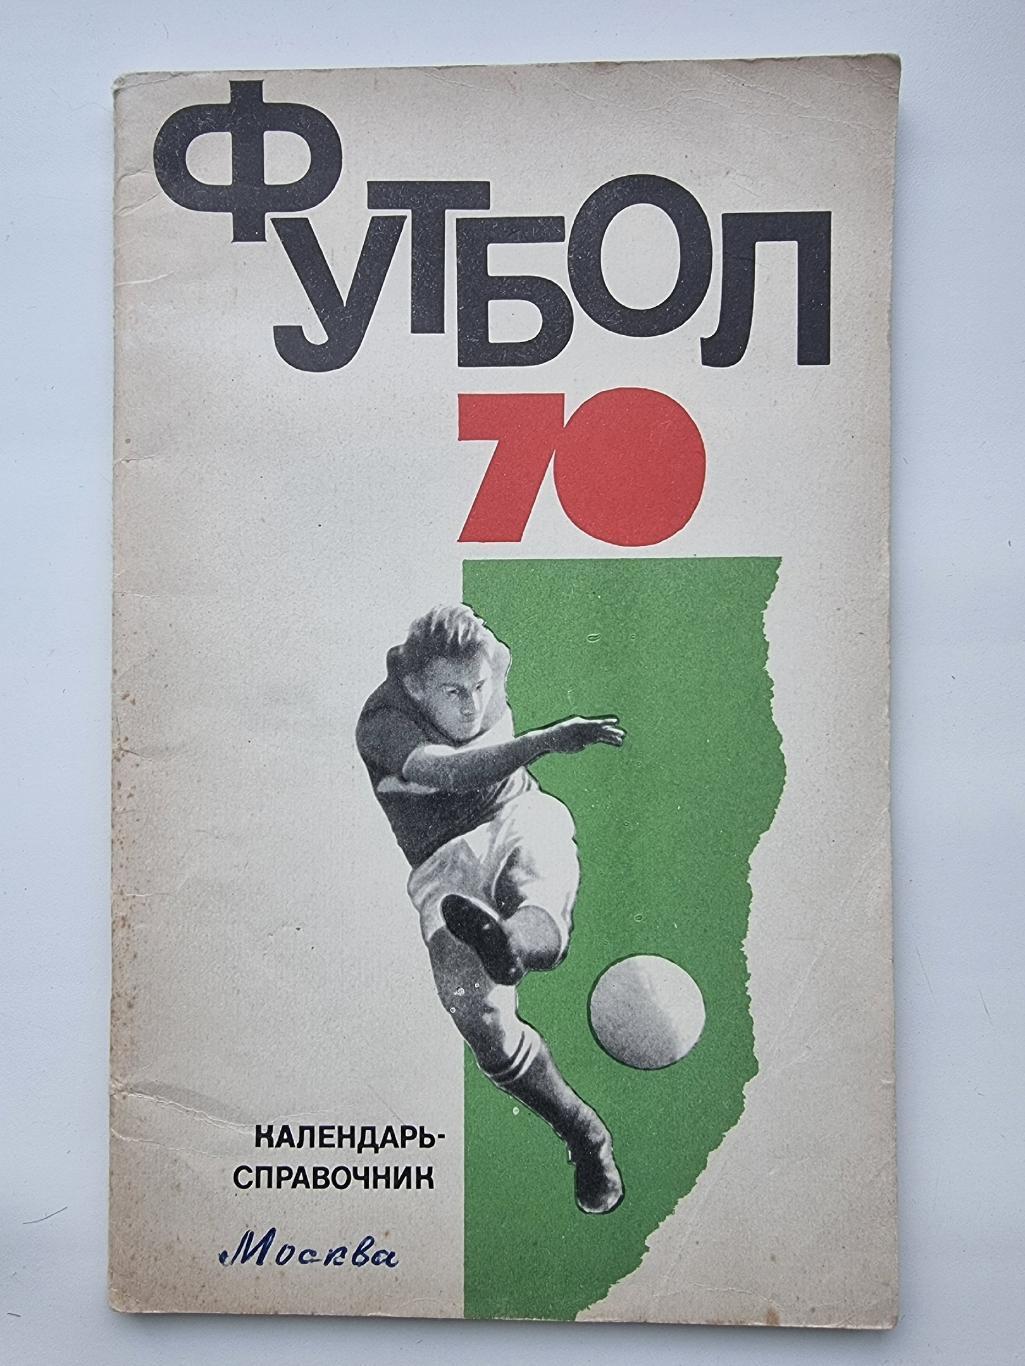 Календарь-справочник Футбол. ФиС Москва 1970